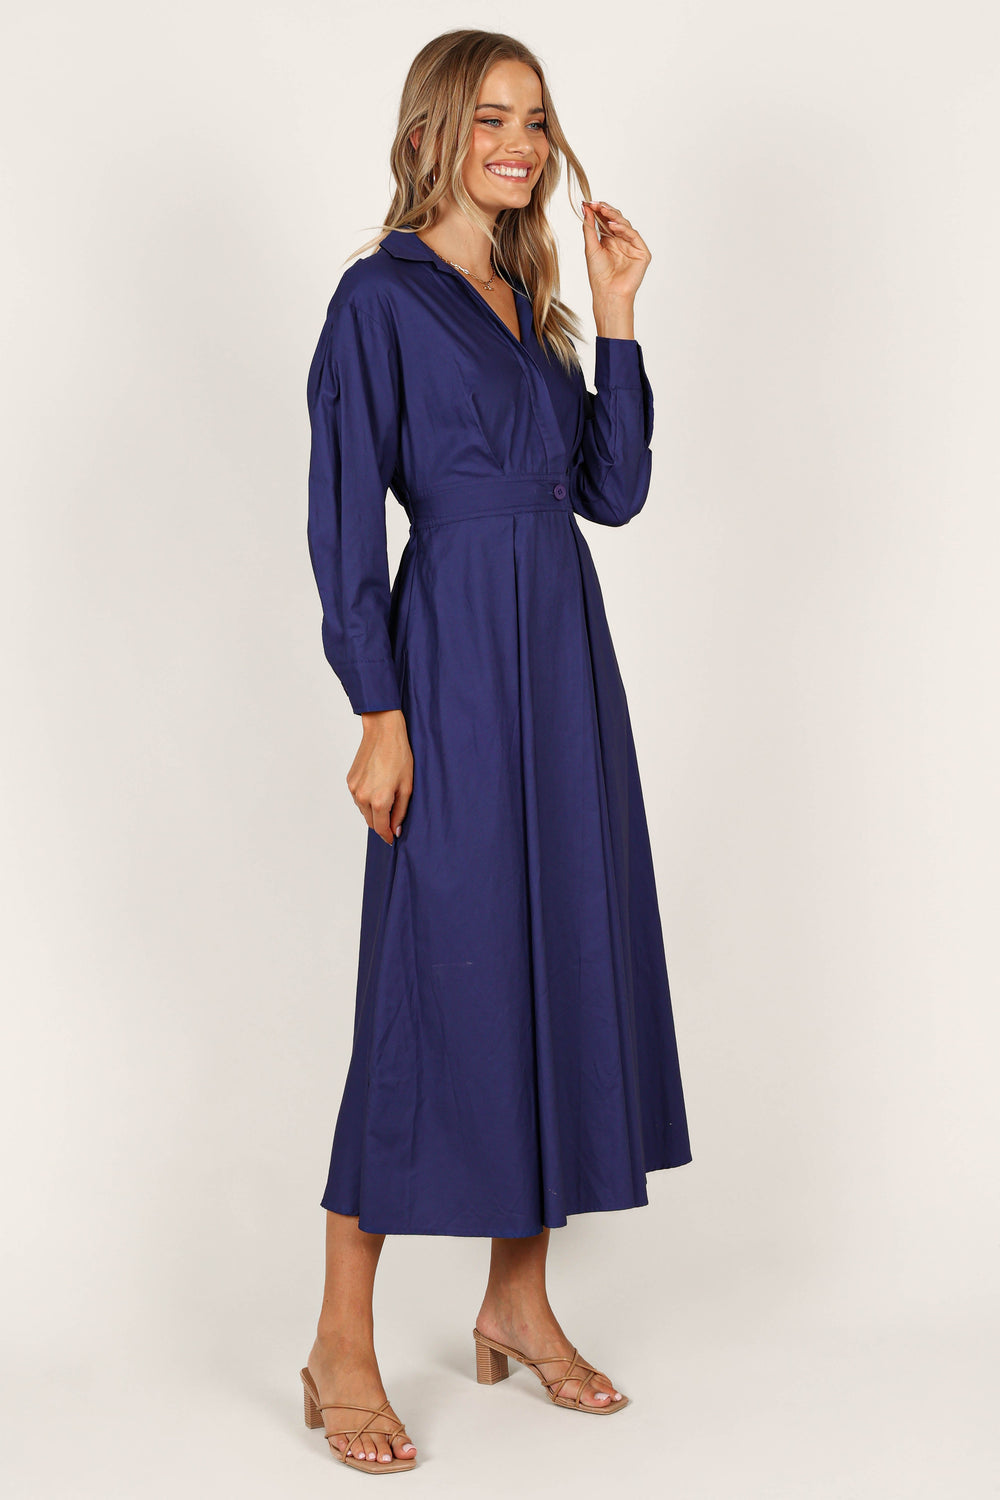 Petal and Pup USA DRESSES Violet Long Sleeve Midi Dress - Royal Blue